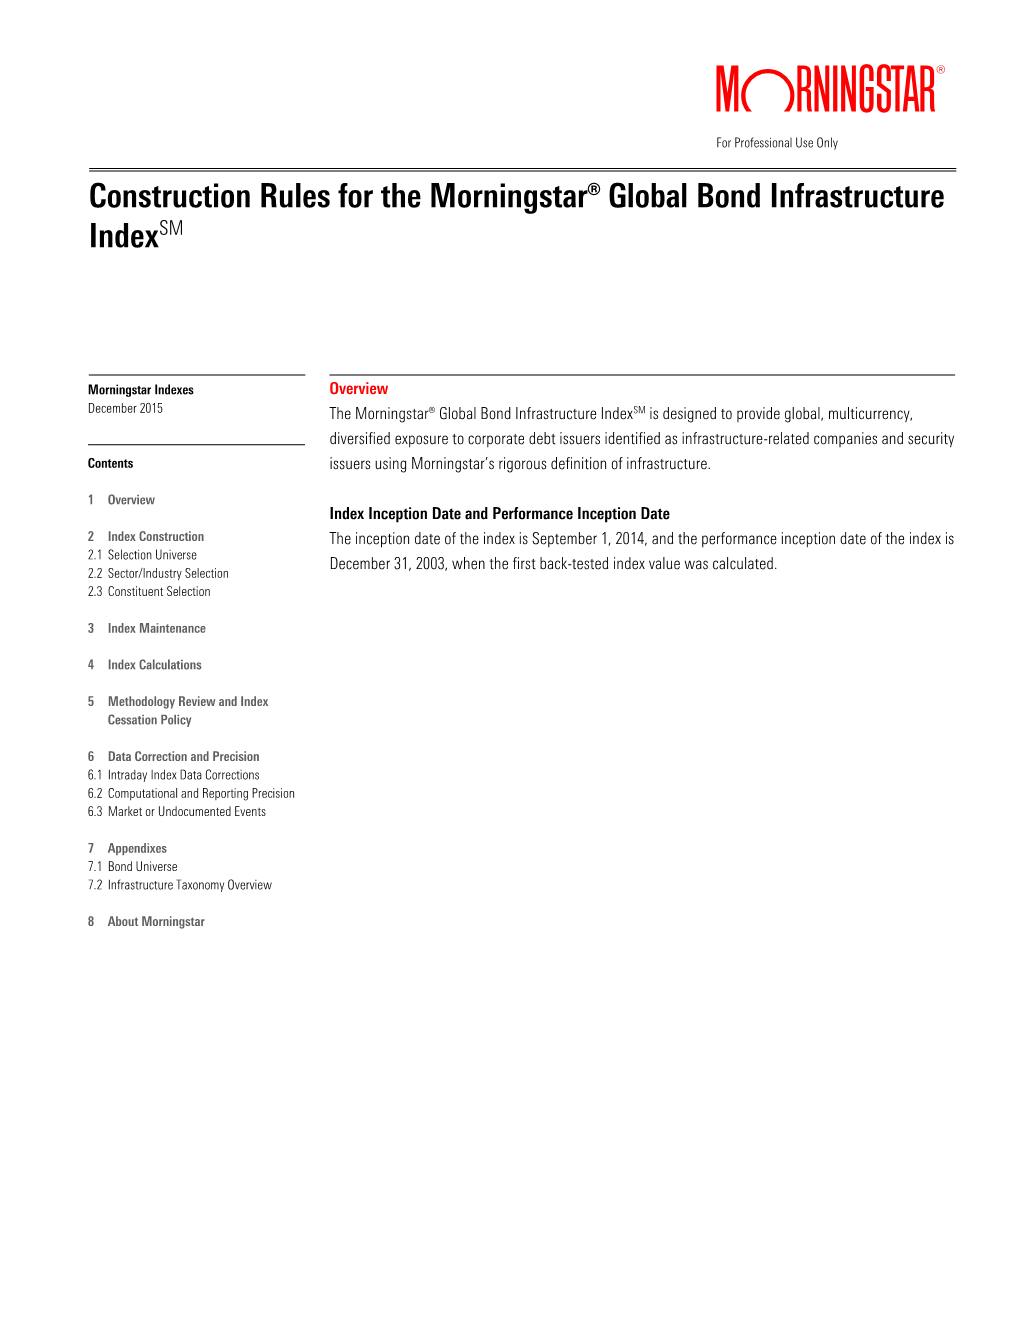 Construction Rules for the Morningstar® Global Bond Infrastructure Indexsm